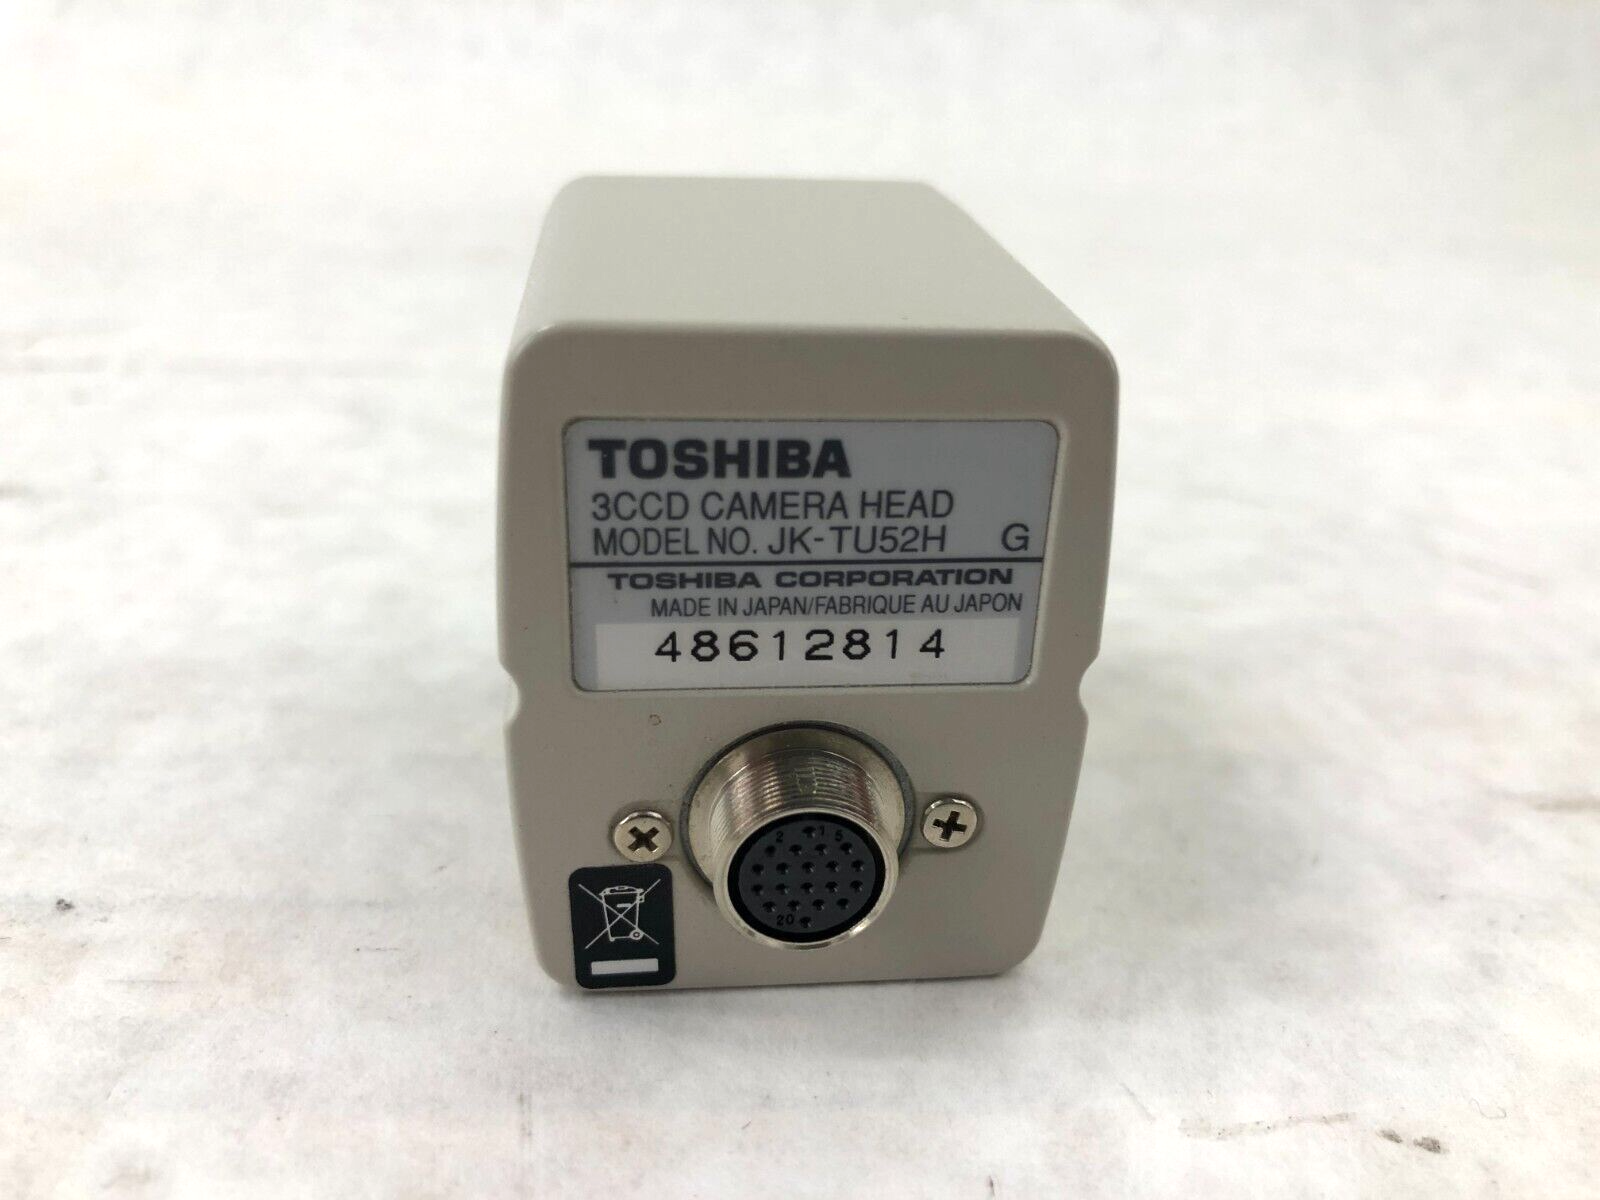 Toshiba JK-TU52H 3-CCD Camera Head Untested